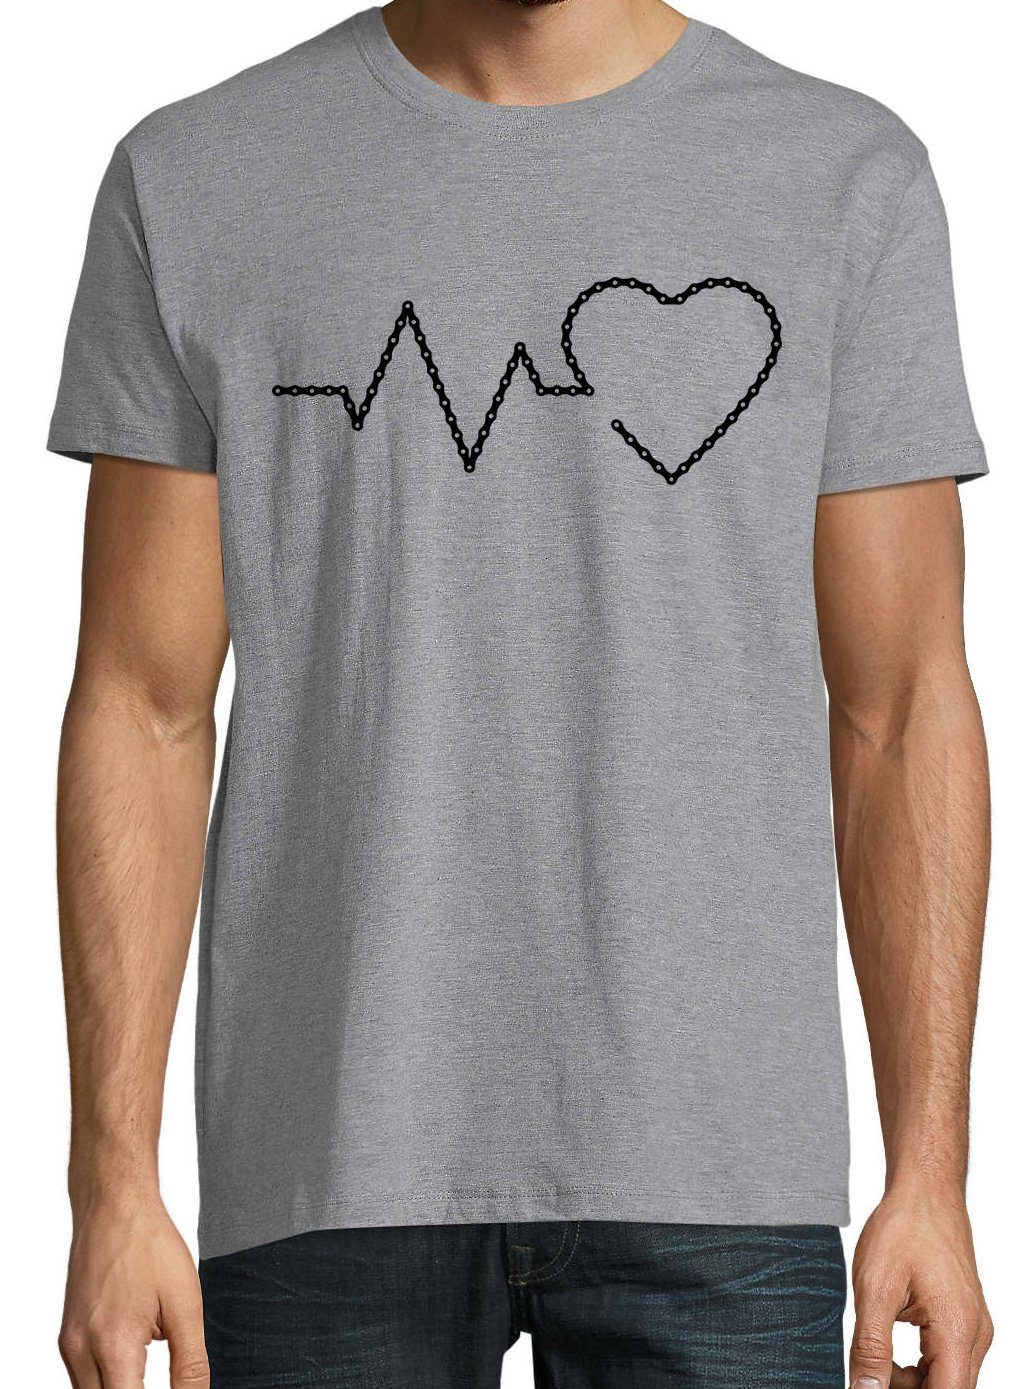 Frontprint Fahrradkette mit Youth T-Shirt Designz T-Shirt Herren Grau Heartbeat trendigem